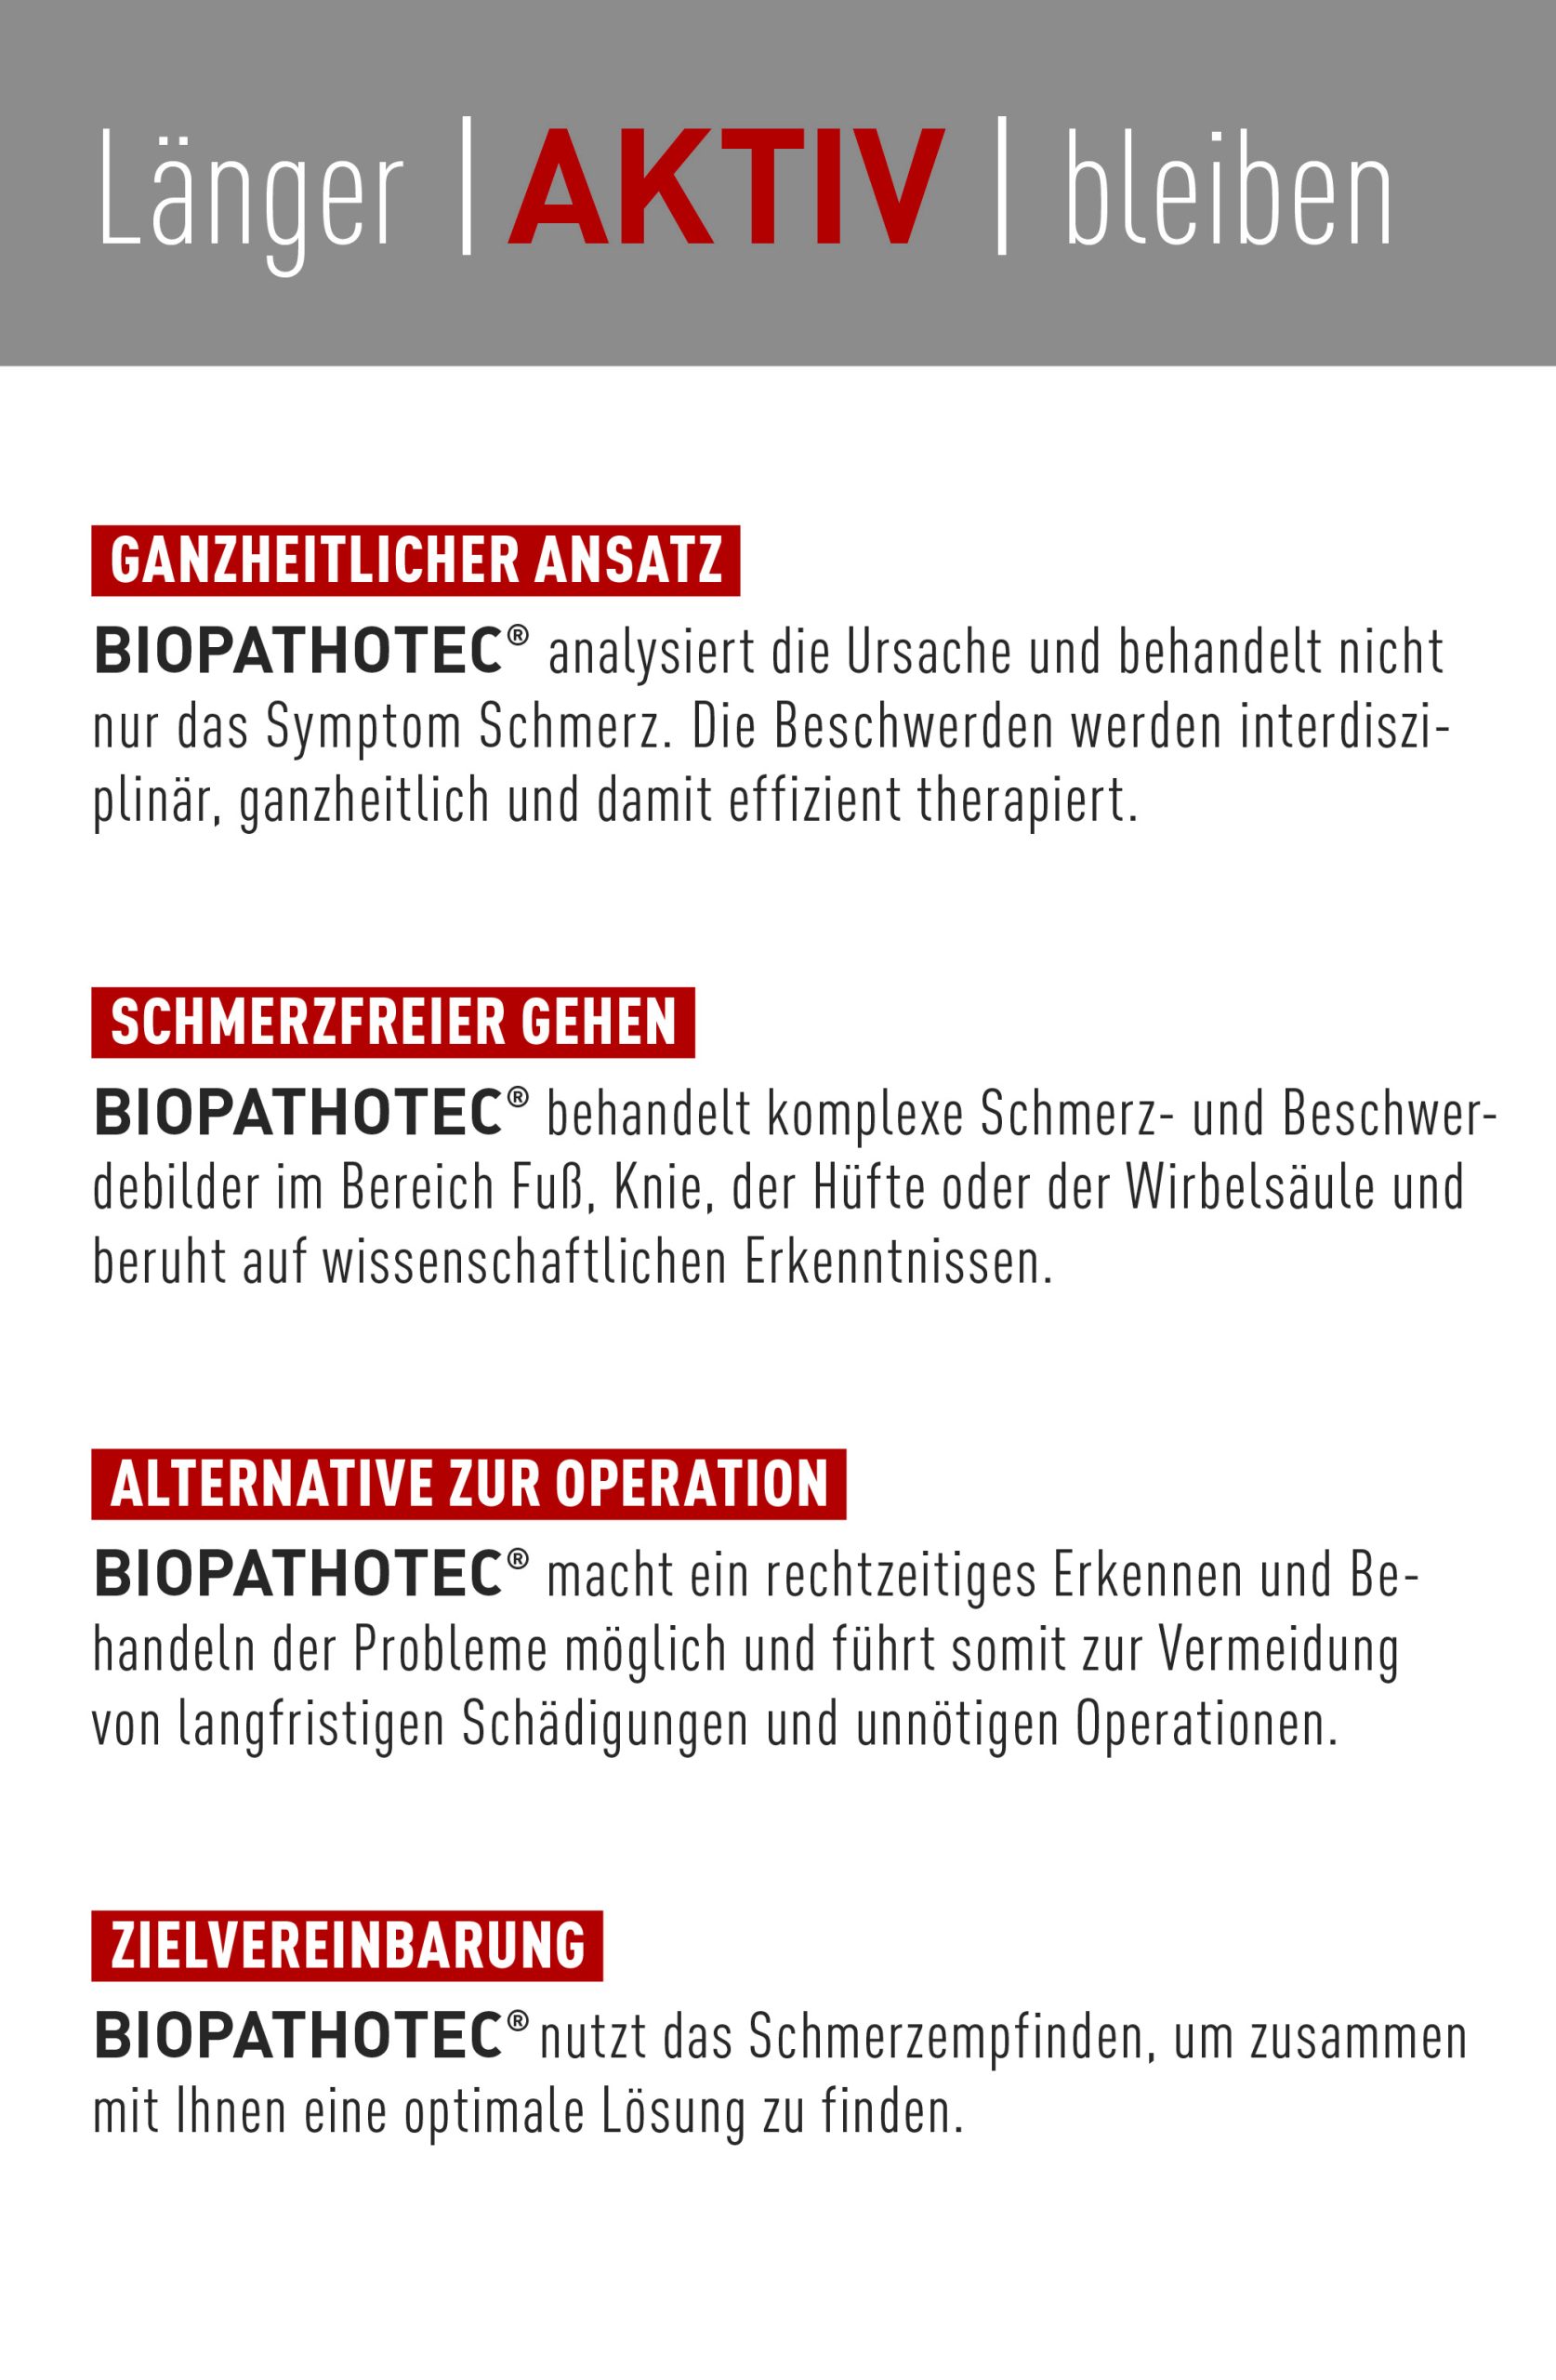 Textbaustein_BIOPATHOTEC_Länger_aktiv_bleiben